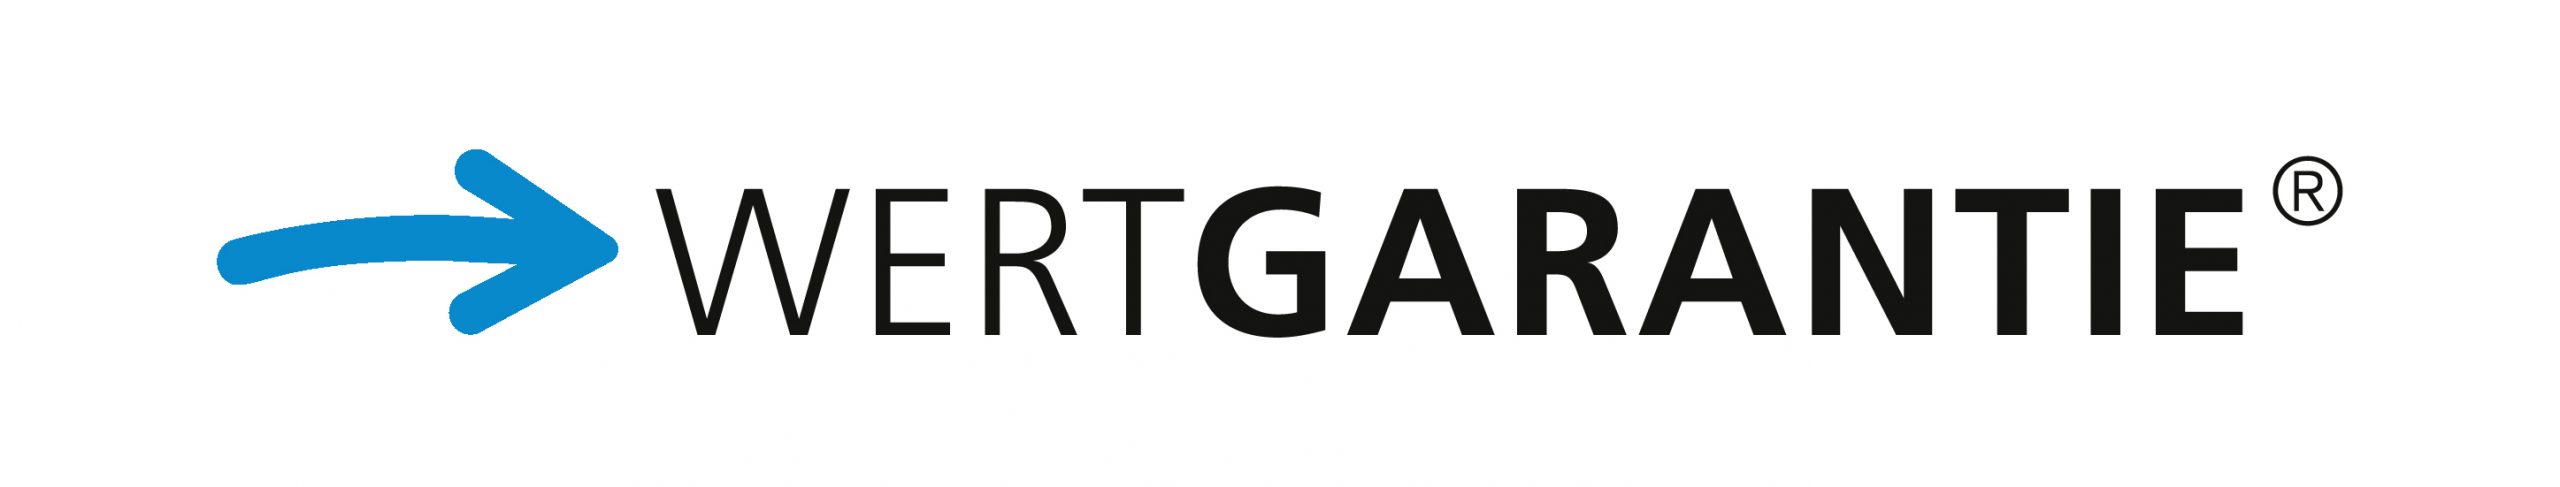 wertgarantie_logo_1